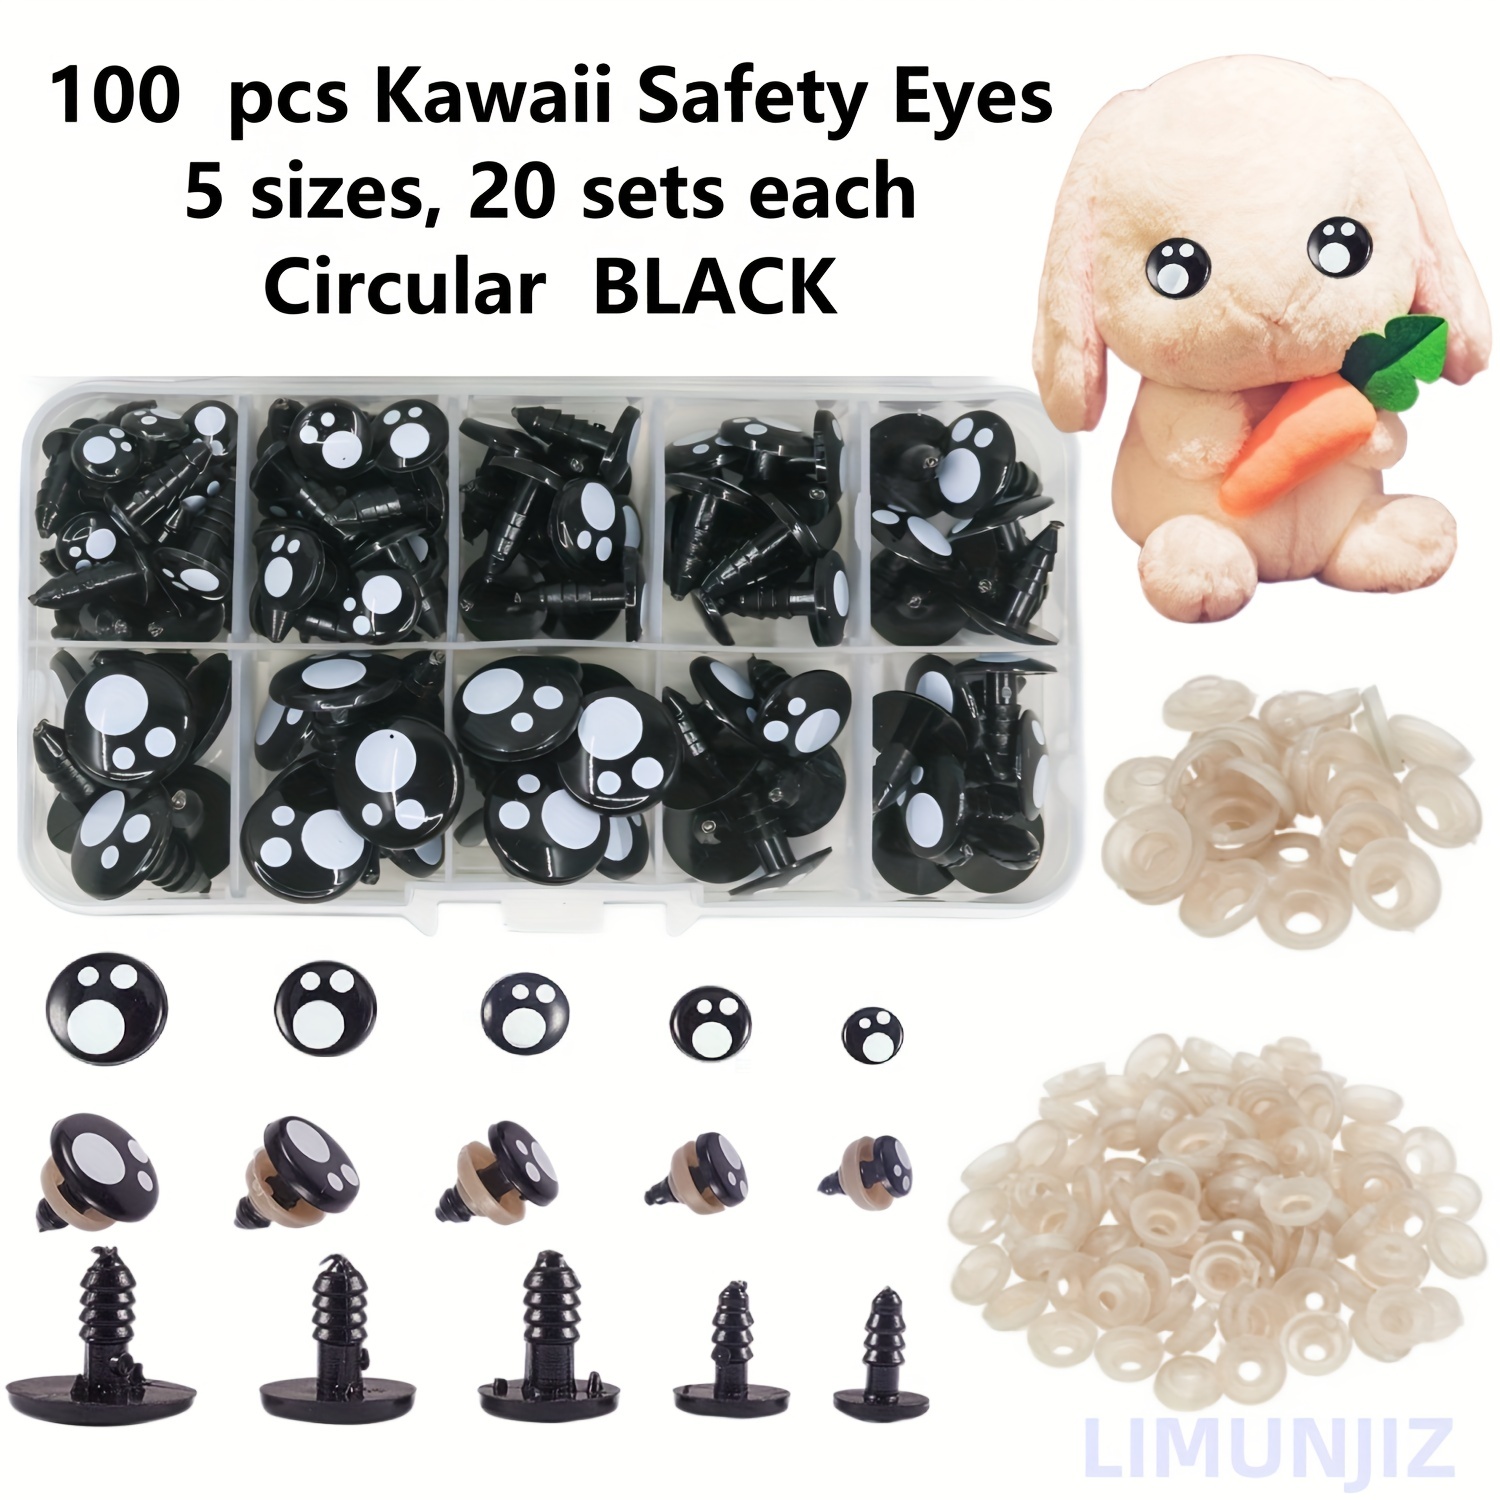 yeux kawaii ovales pour amigurumi et peluches noirs 12 mm